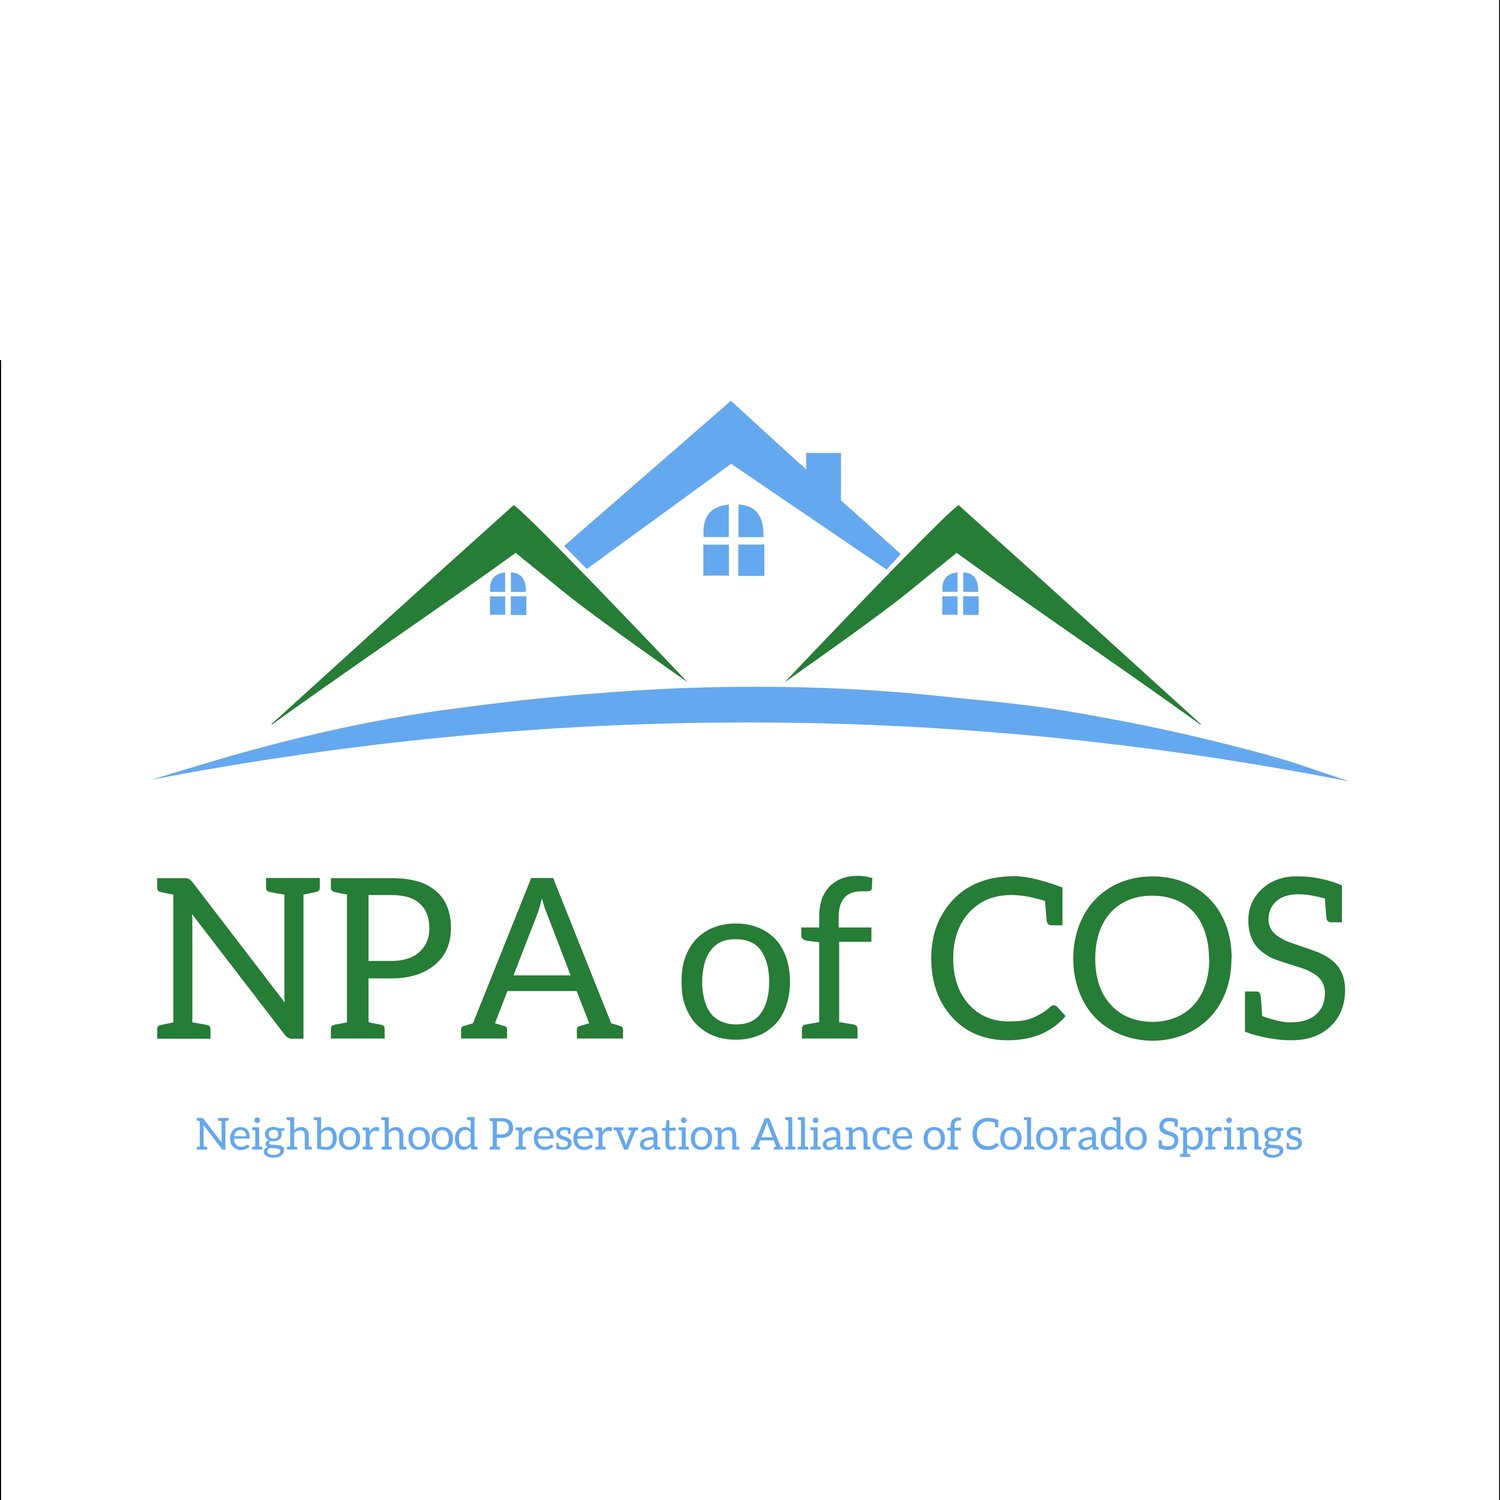 Neighborhood Preservation Alliance of Colorado Springs